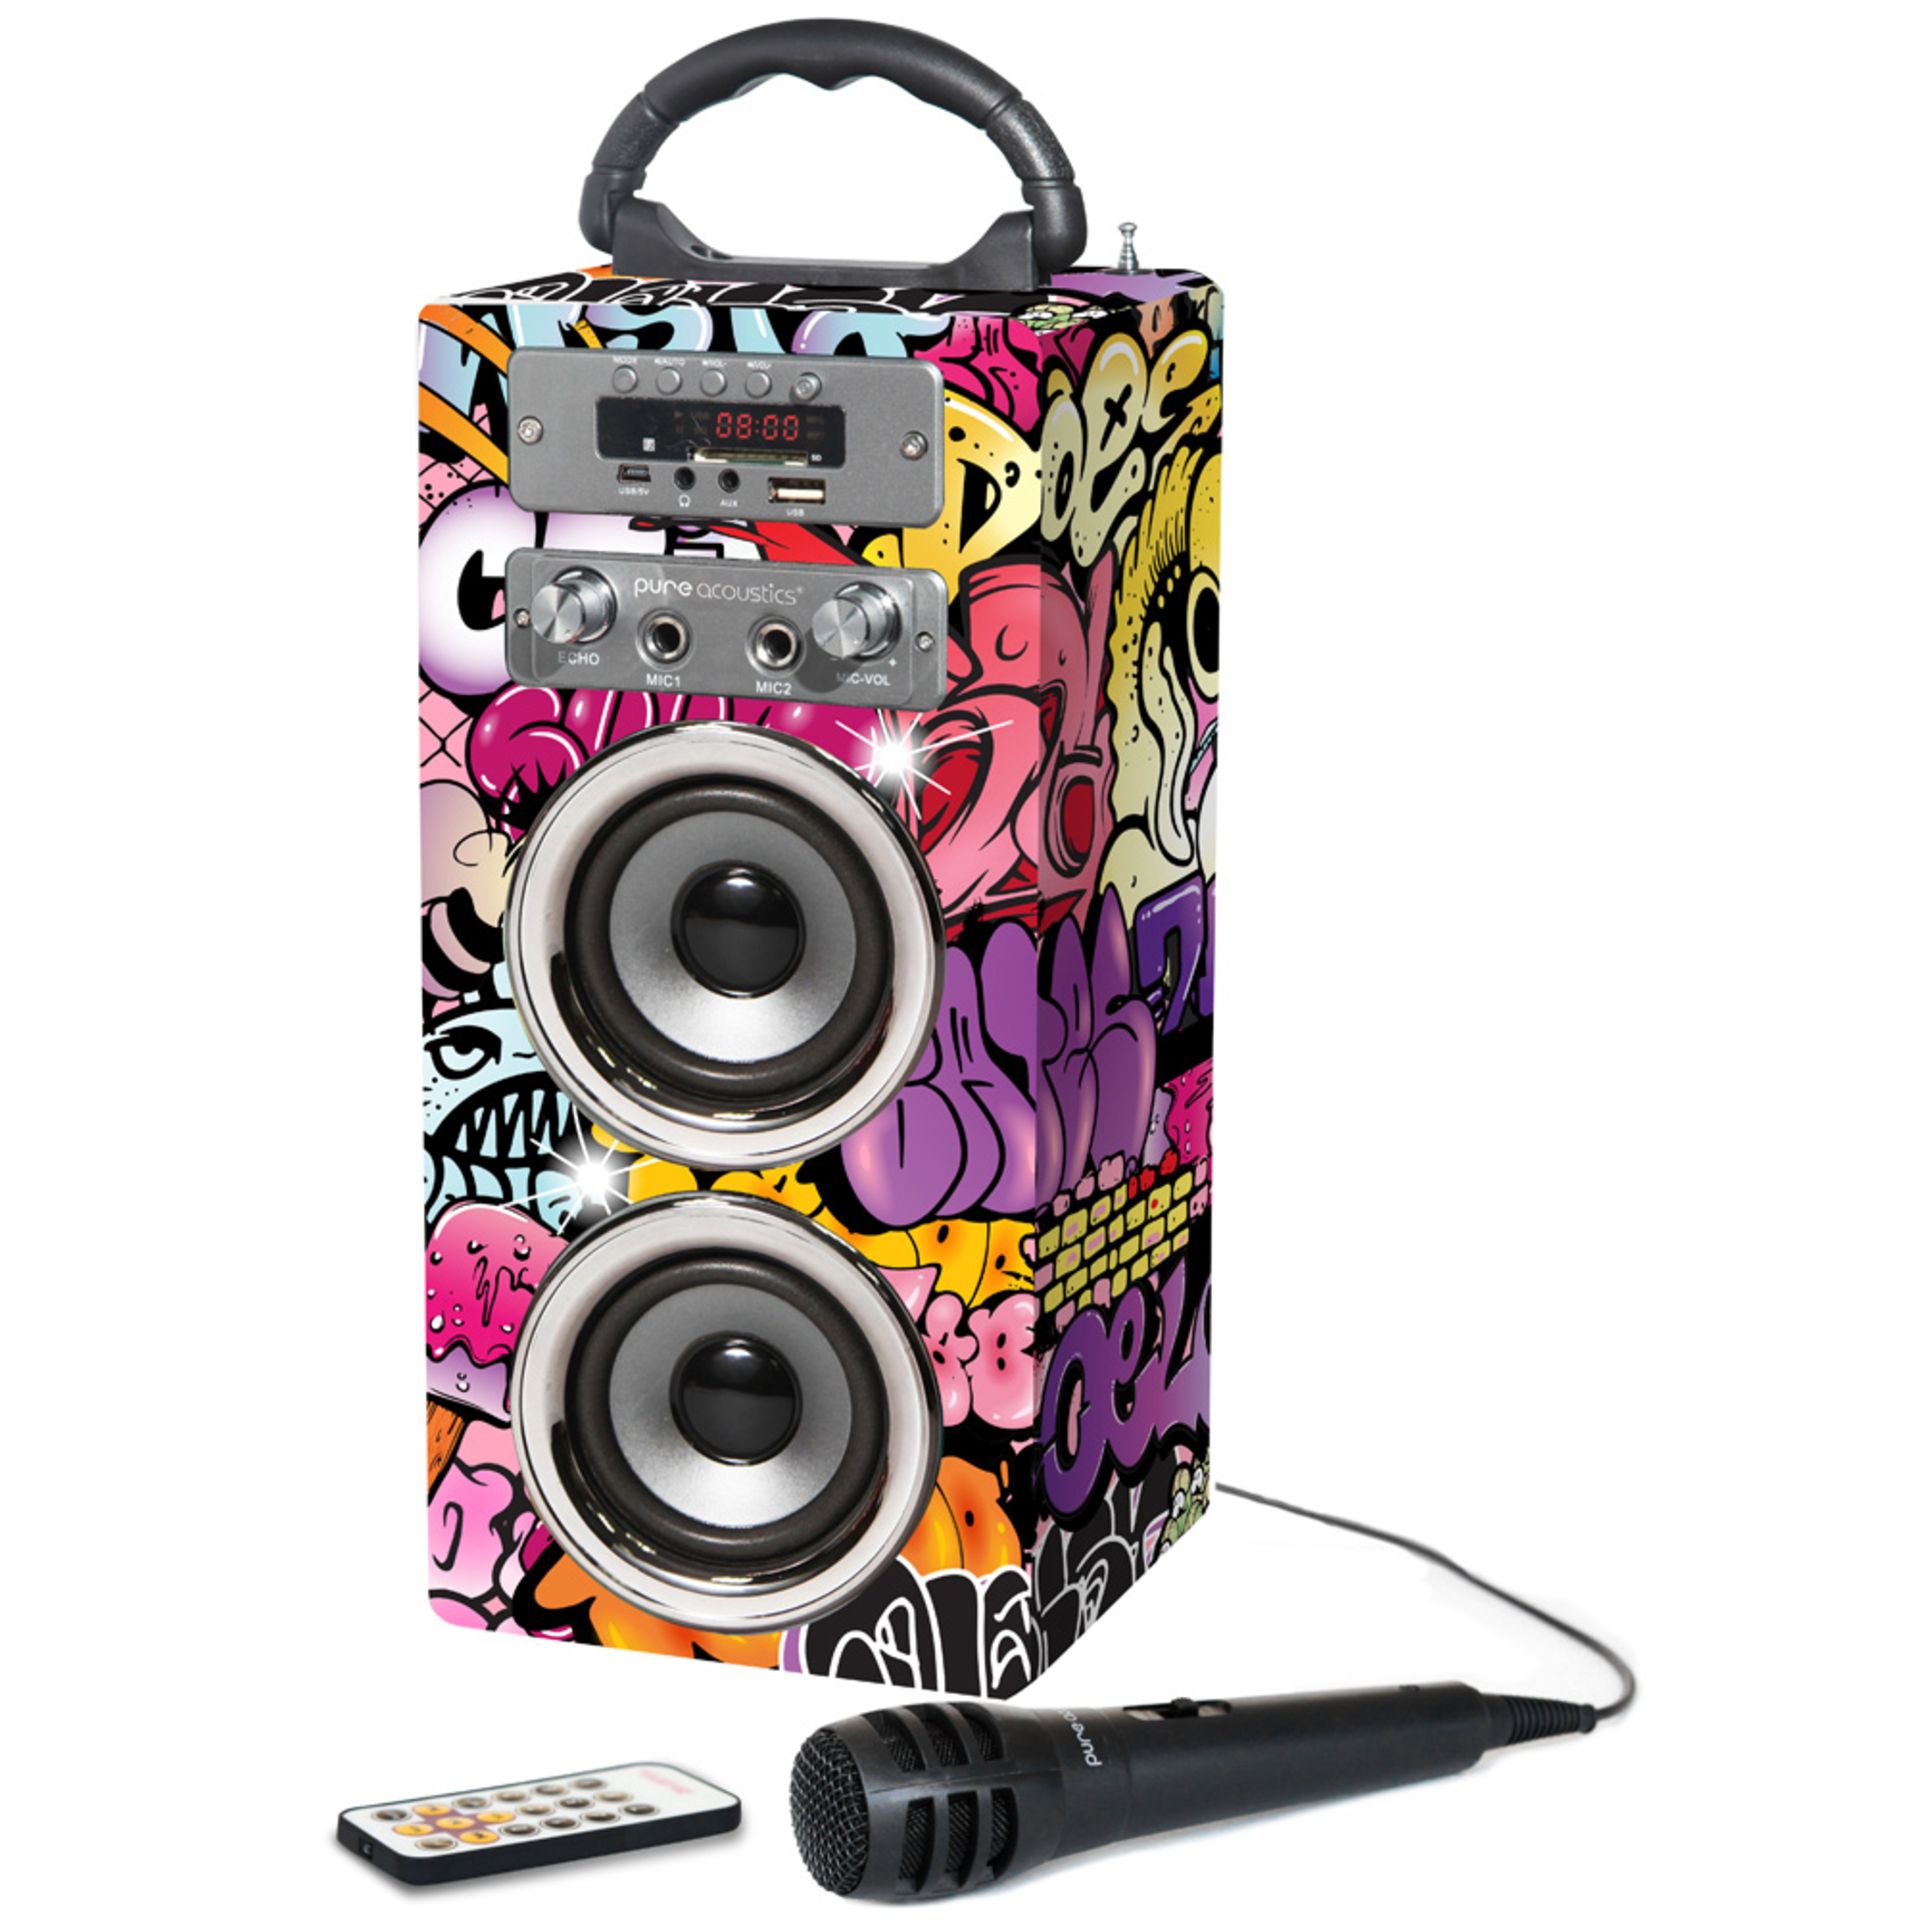 V *TRADE QTY* Brand New Pure Acoustics Graffiti Portable Karaoke Machine ISP £29.98 (Amazon) X 3